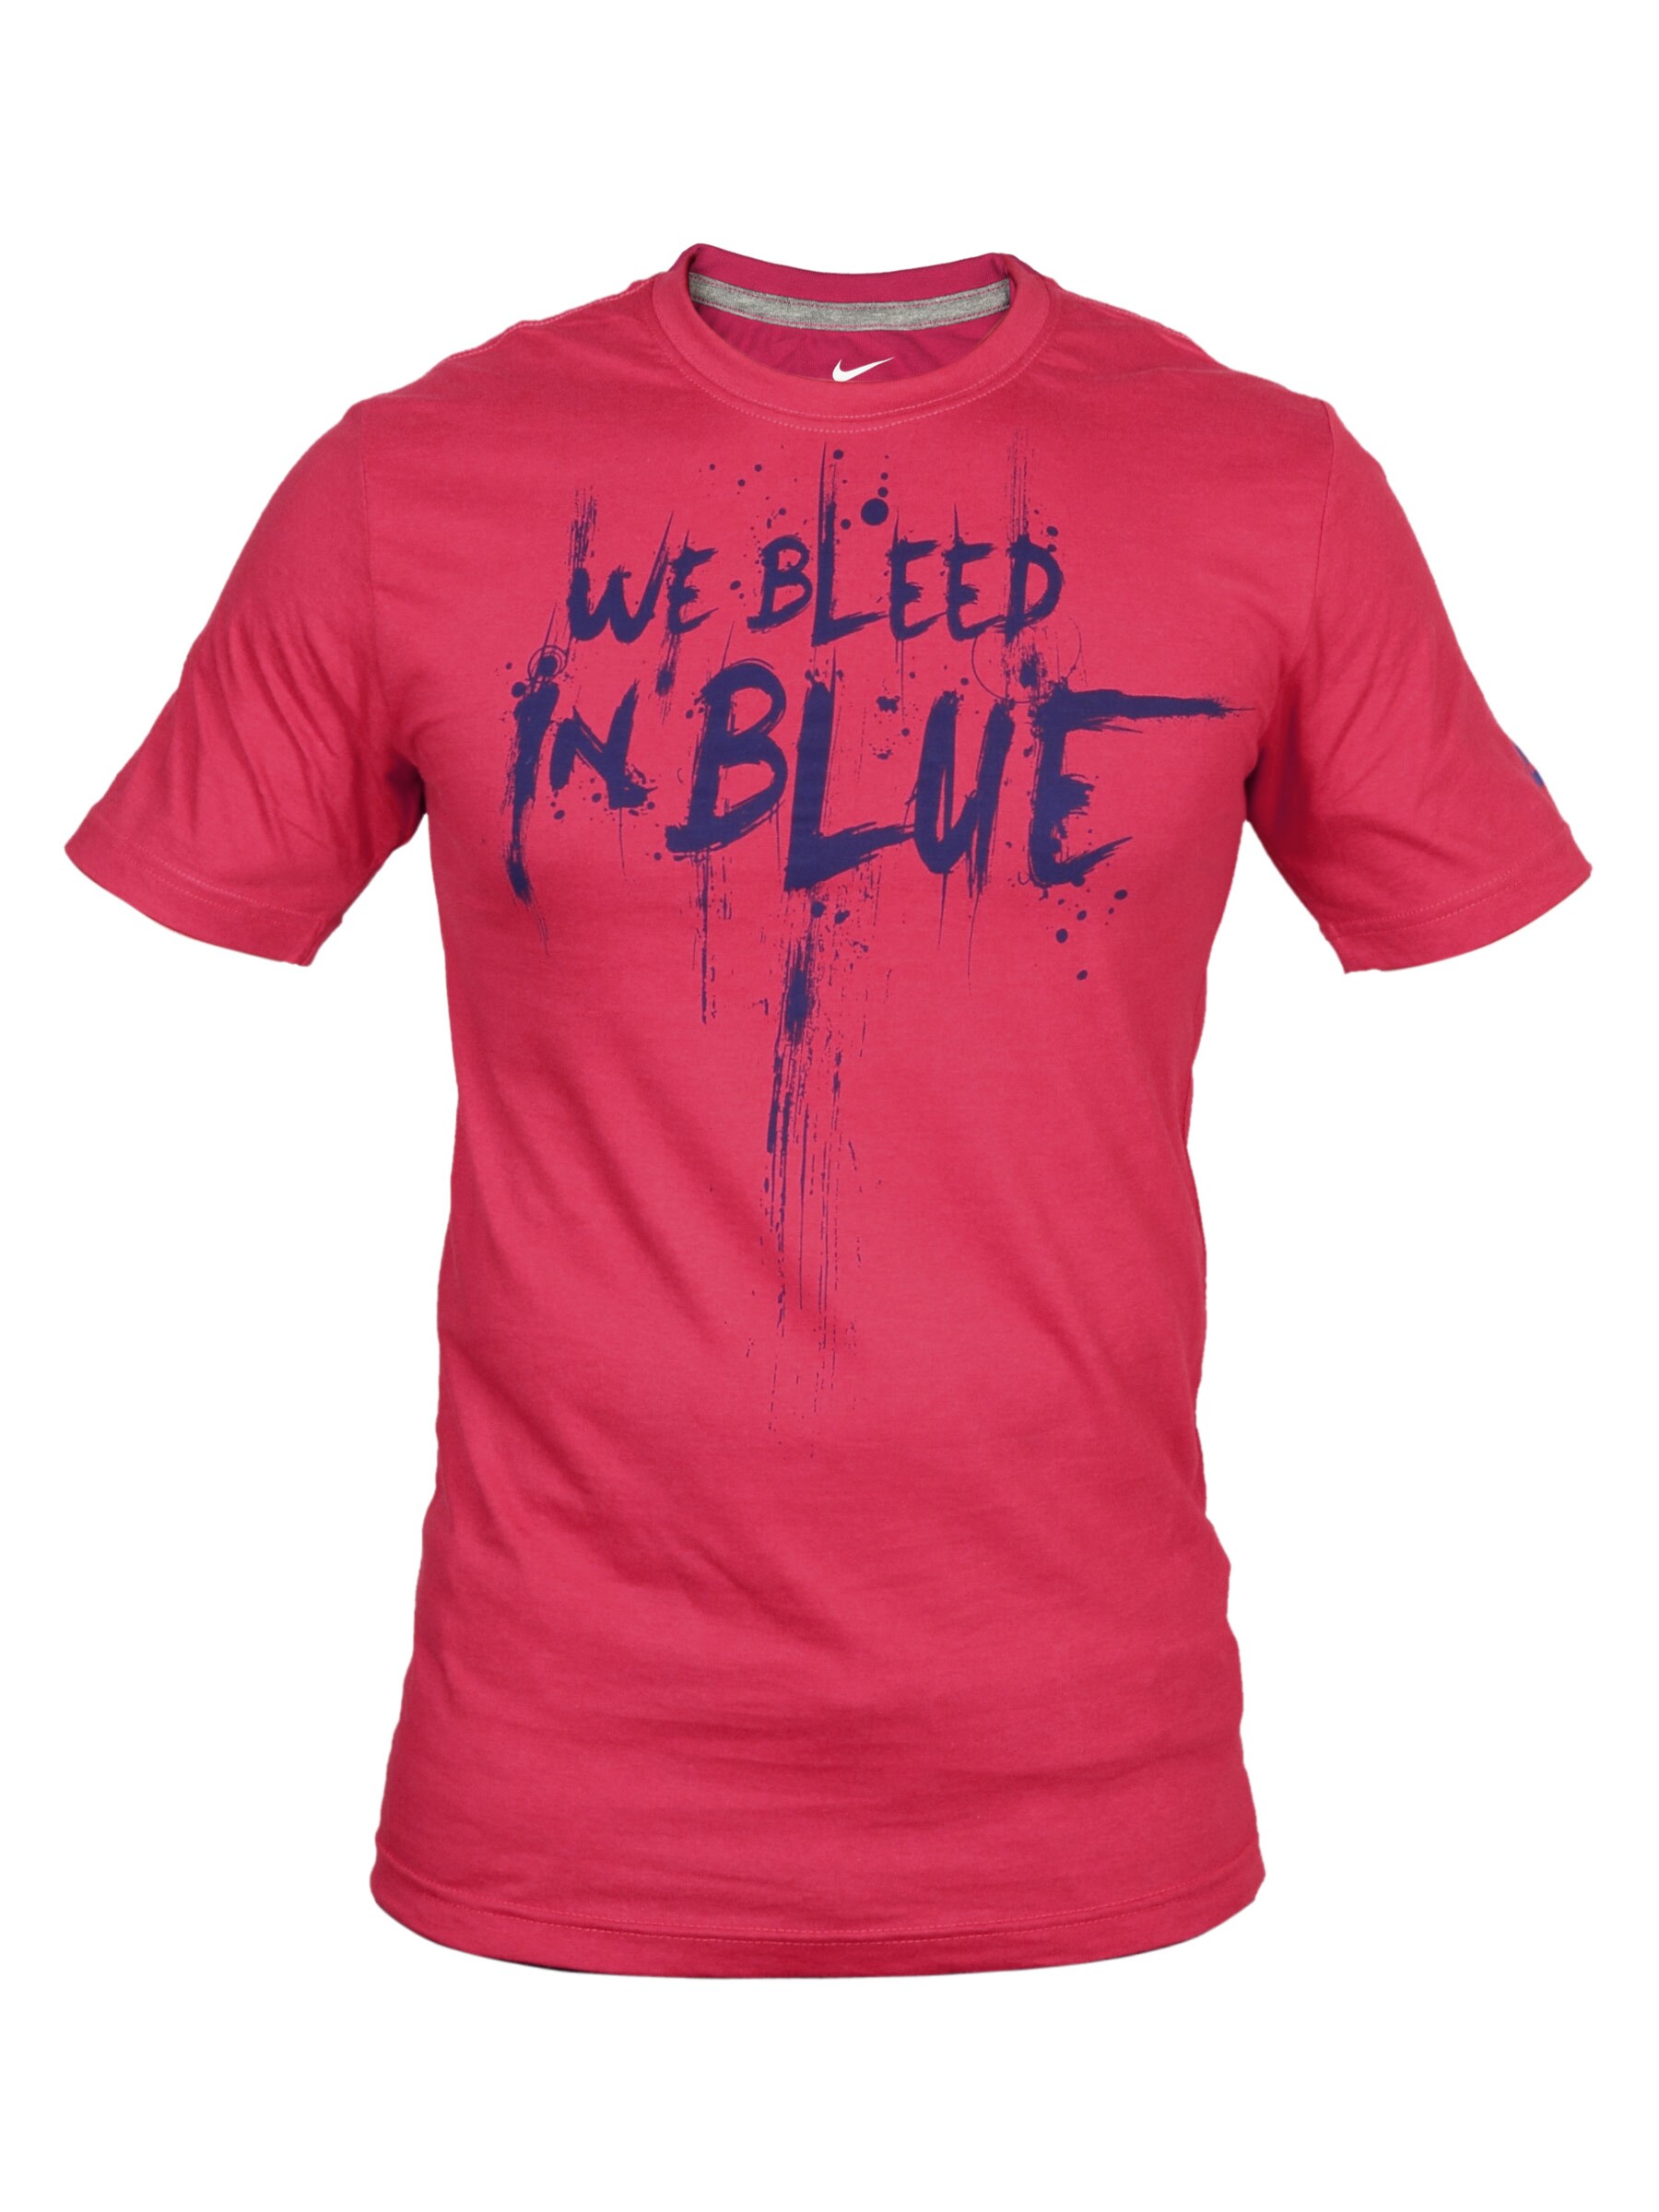 Nike Mens Red Bleed Blue T-shirt